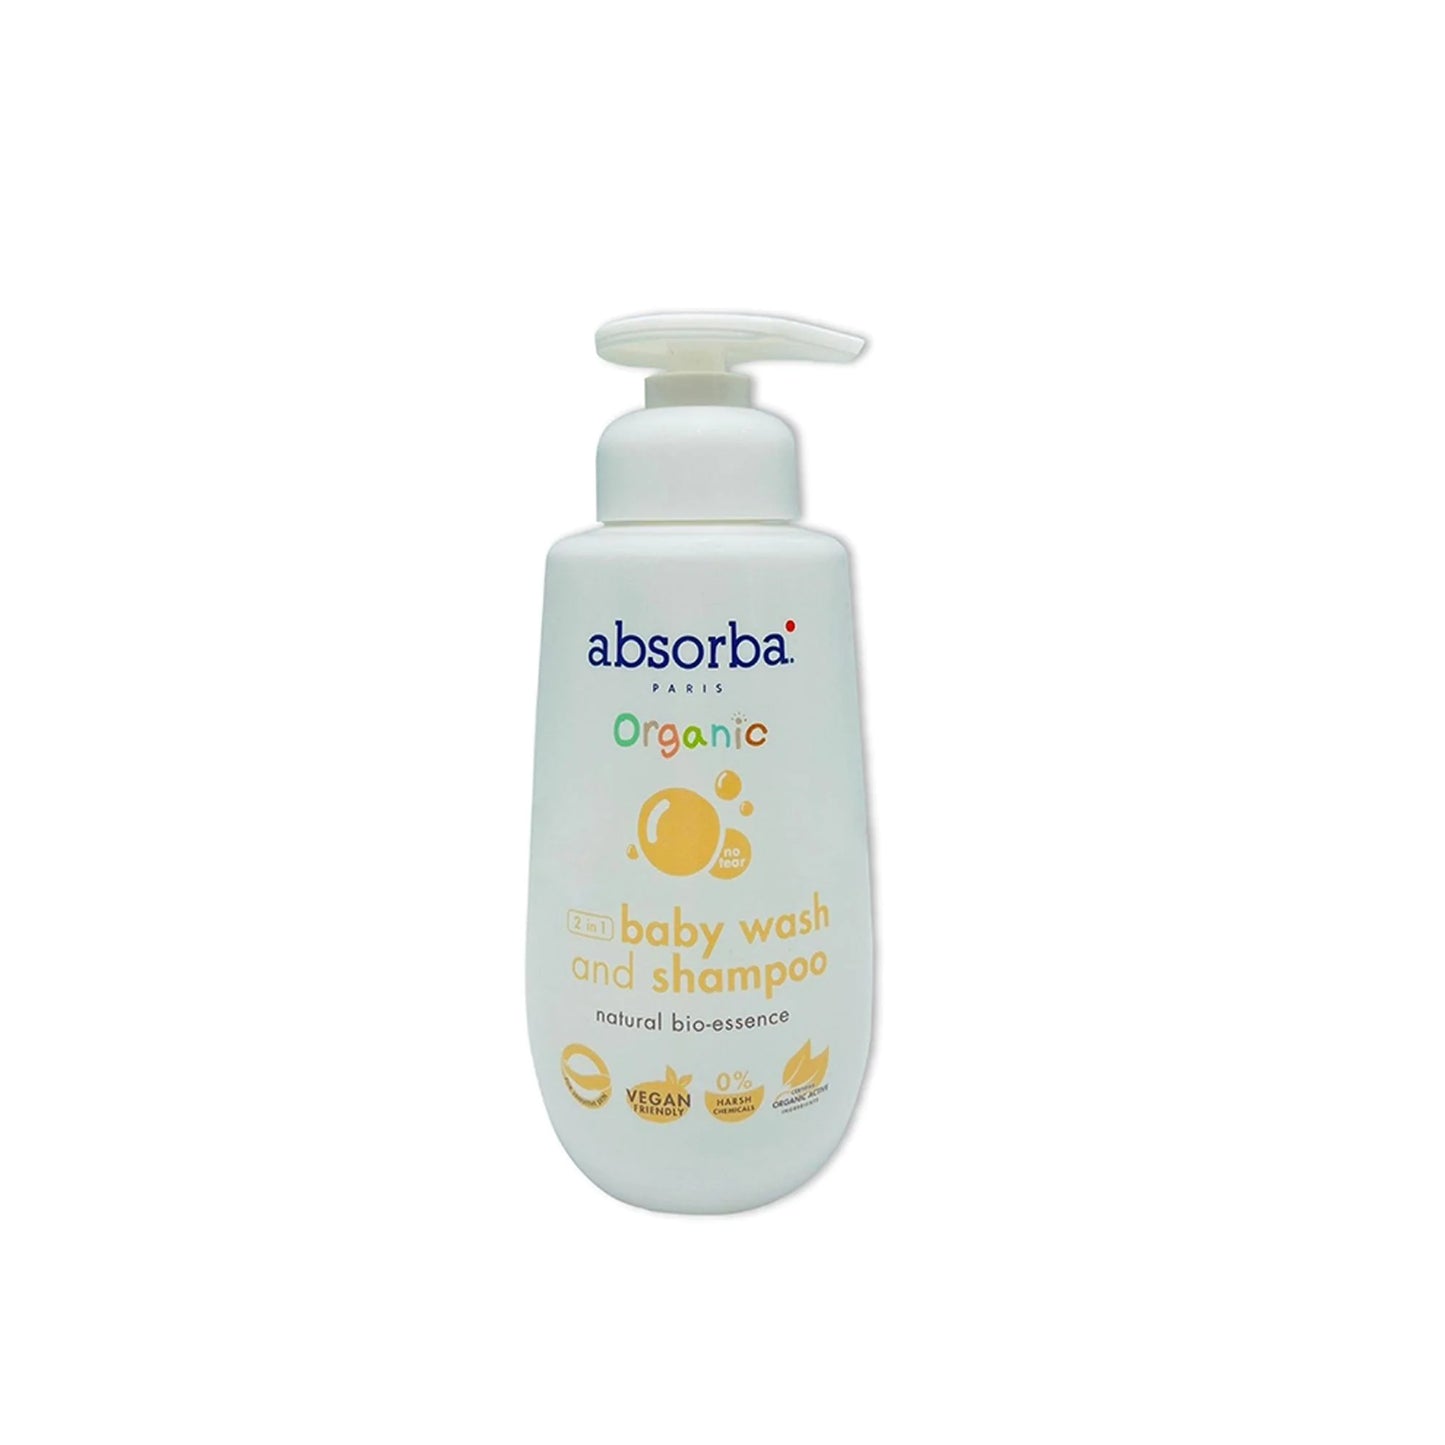 Absorba Organic 2-in-1 Baby Wash and Shampoo (350ml)